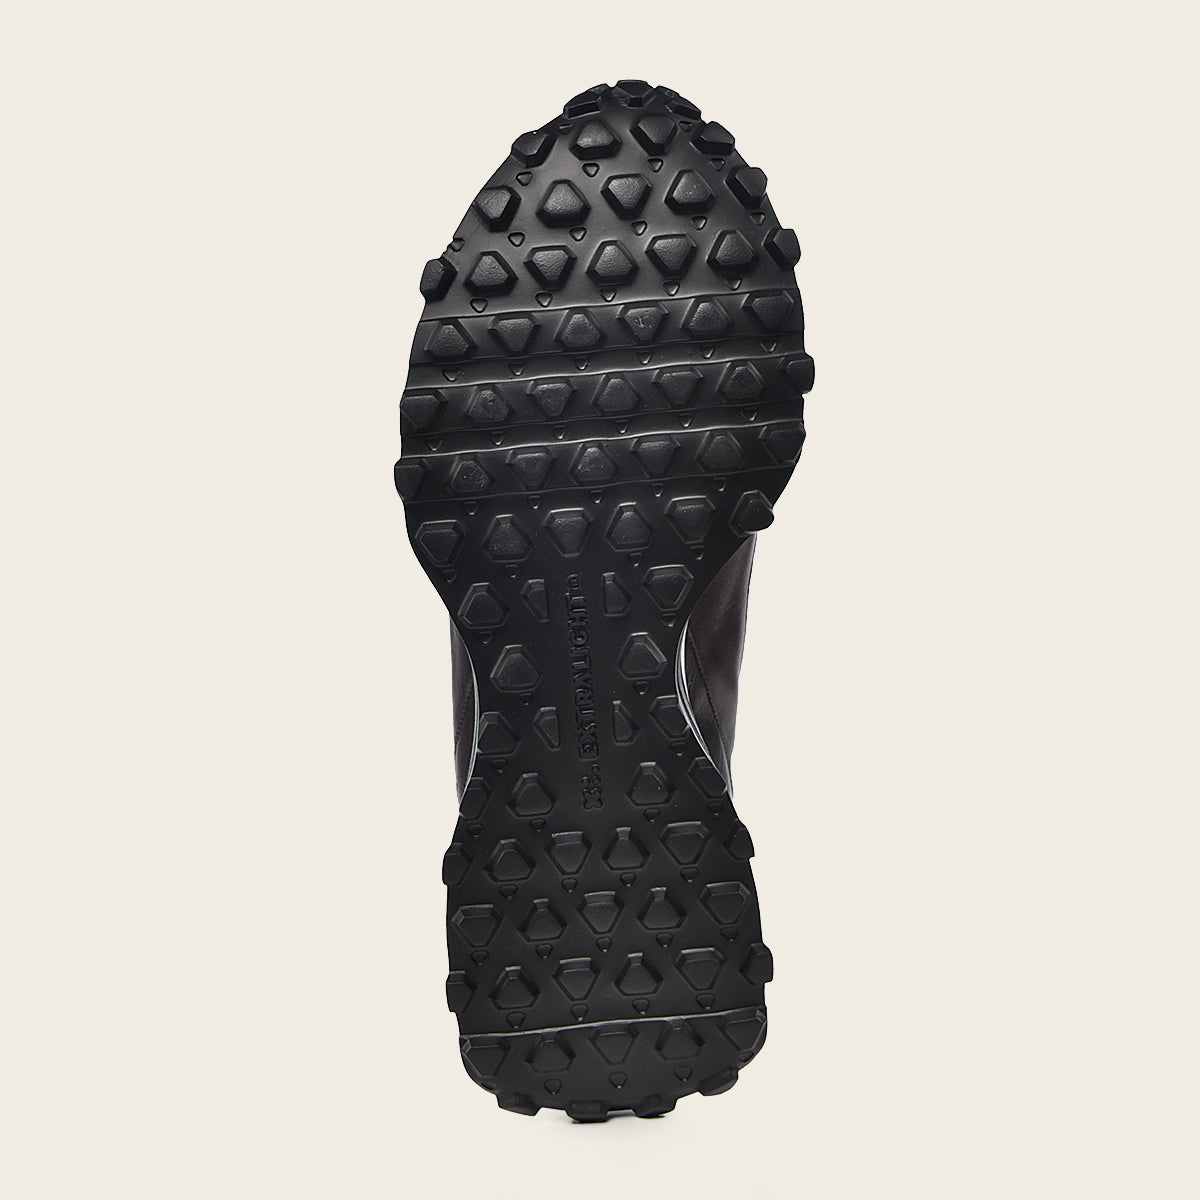 Genuine dark brown exotic leather sneakers with eva bitone sole